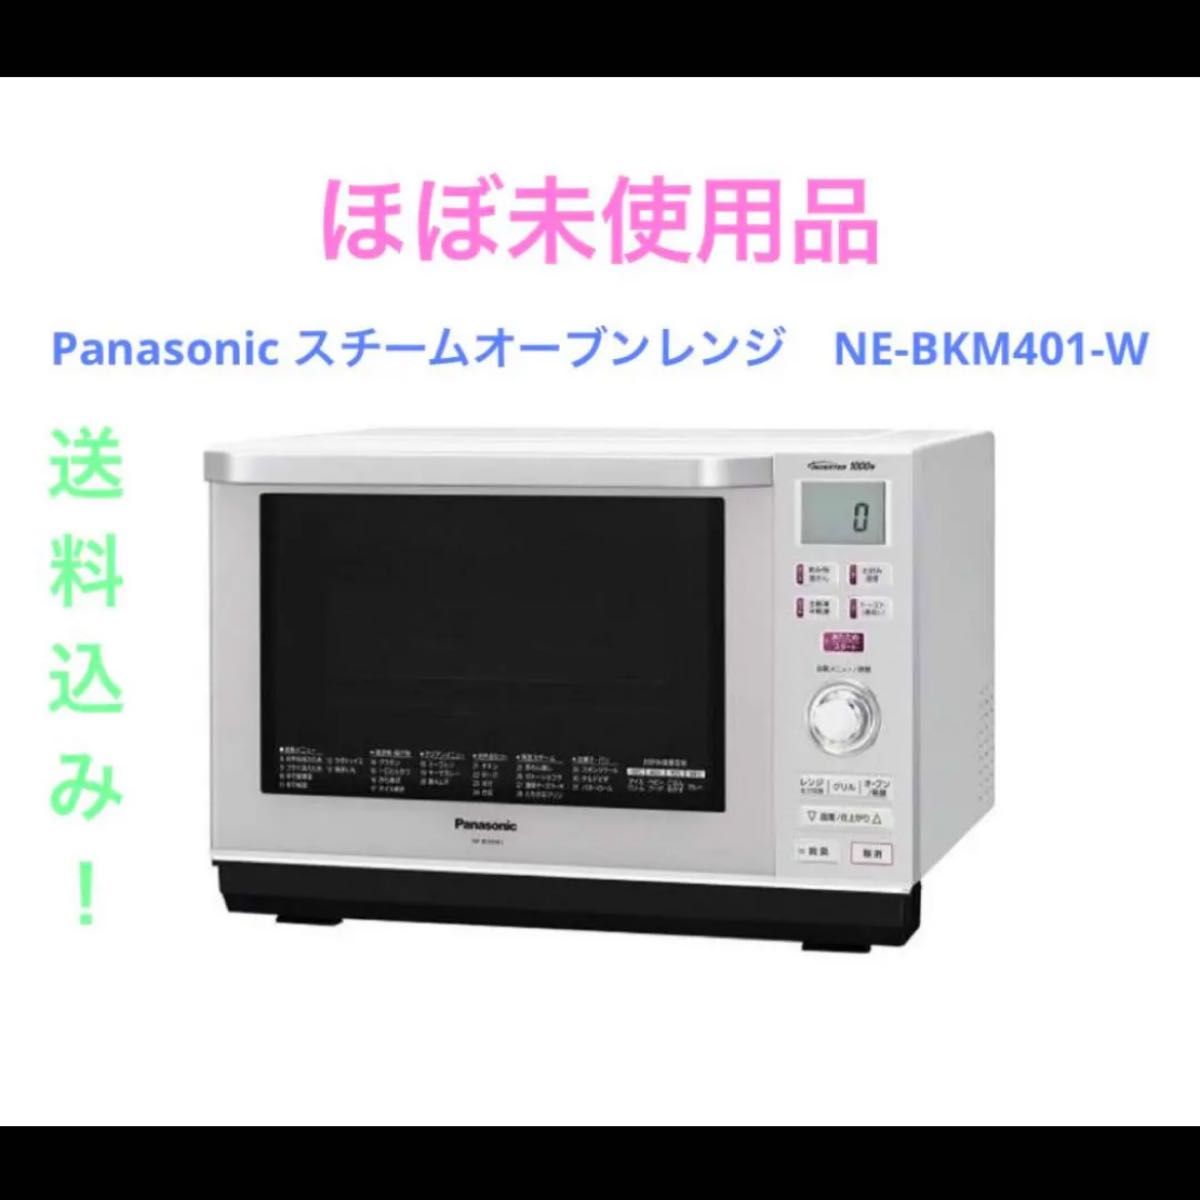 Panasonic スチームオーブンレンジ NE-BKM401-W-